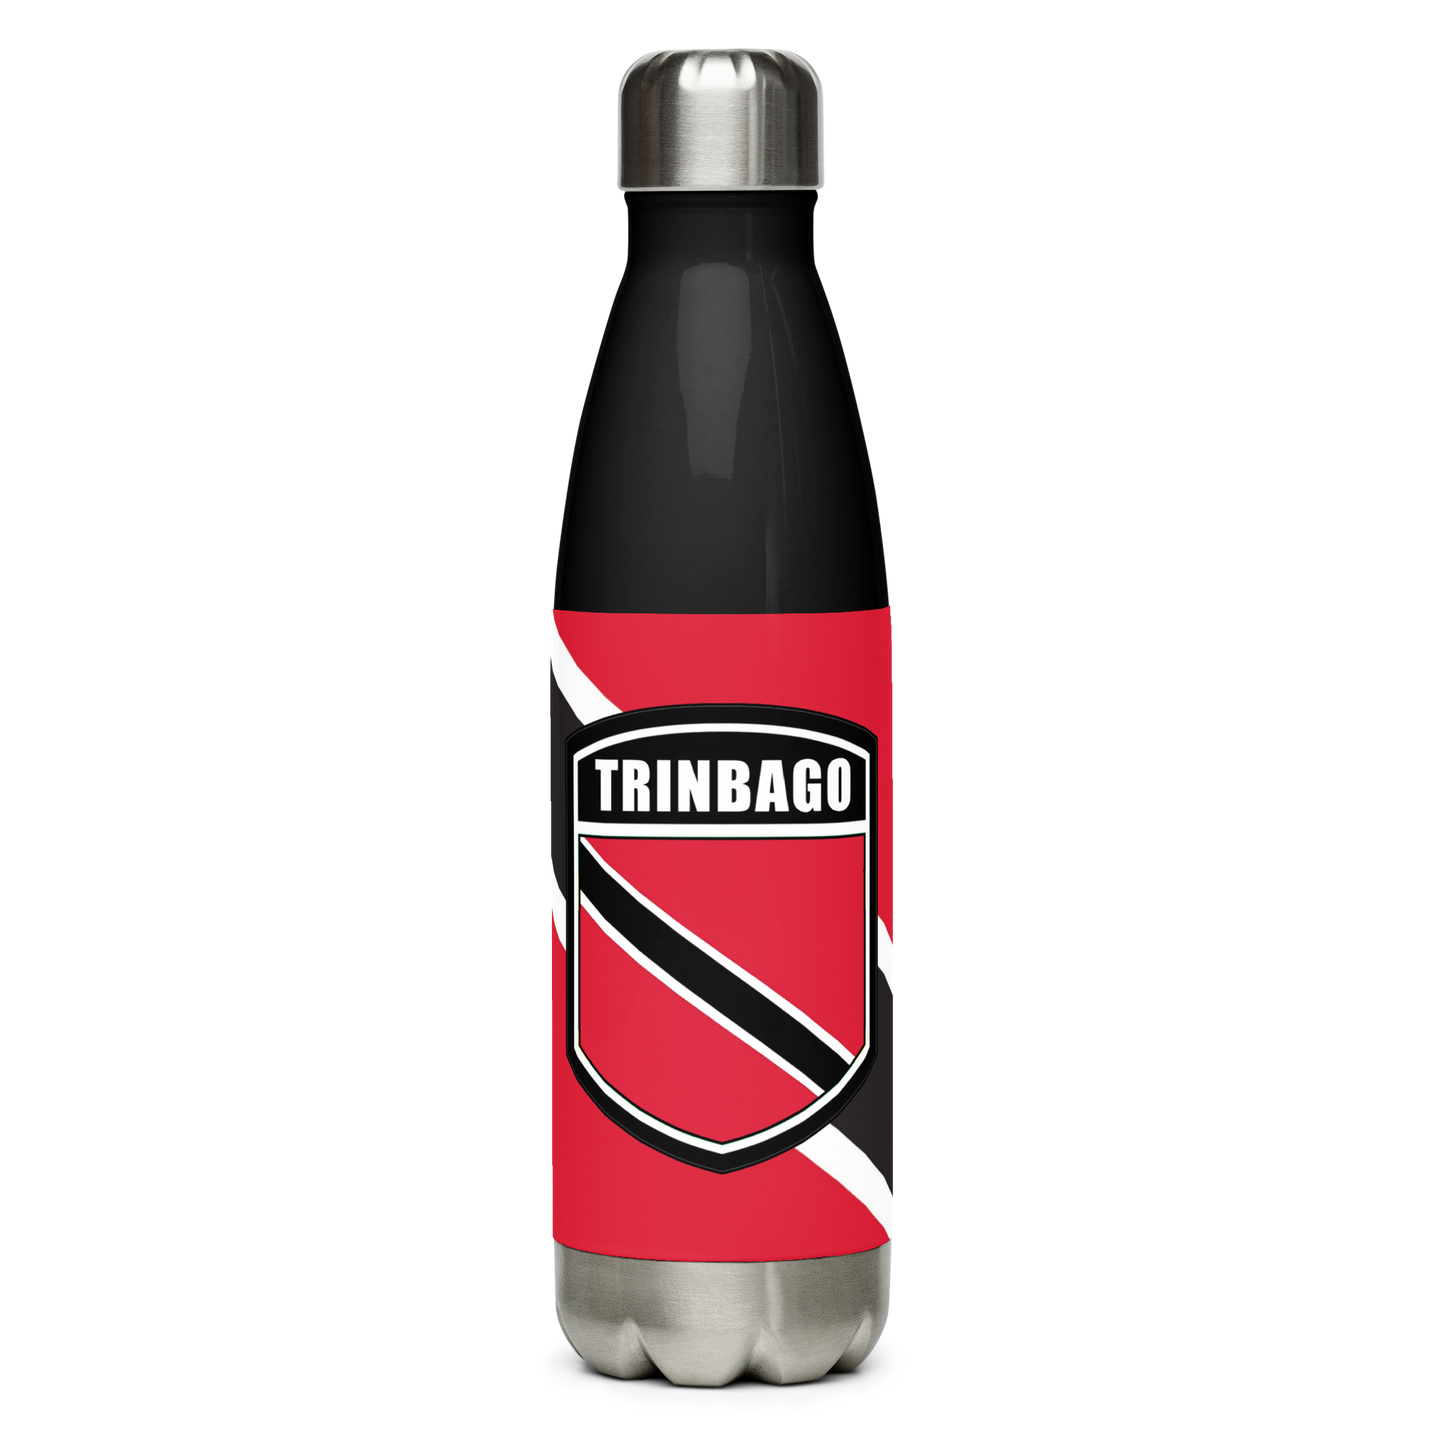 Trinbago Stainless Steel Water Bottle